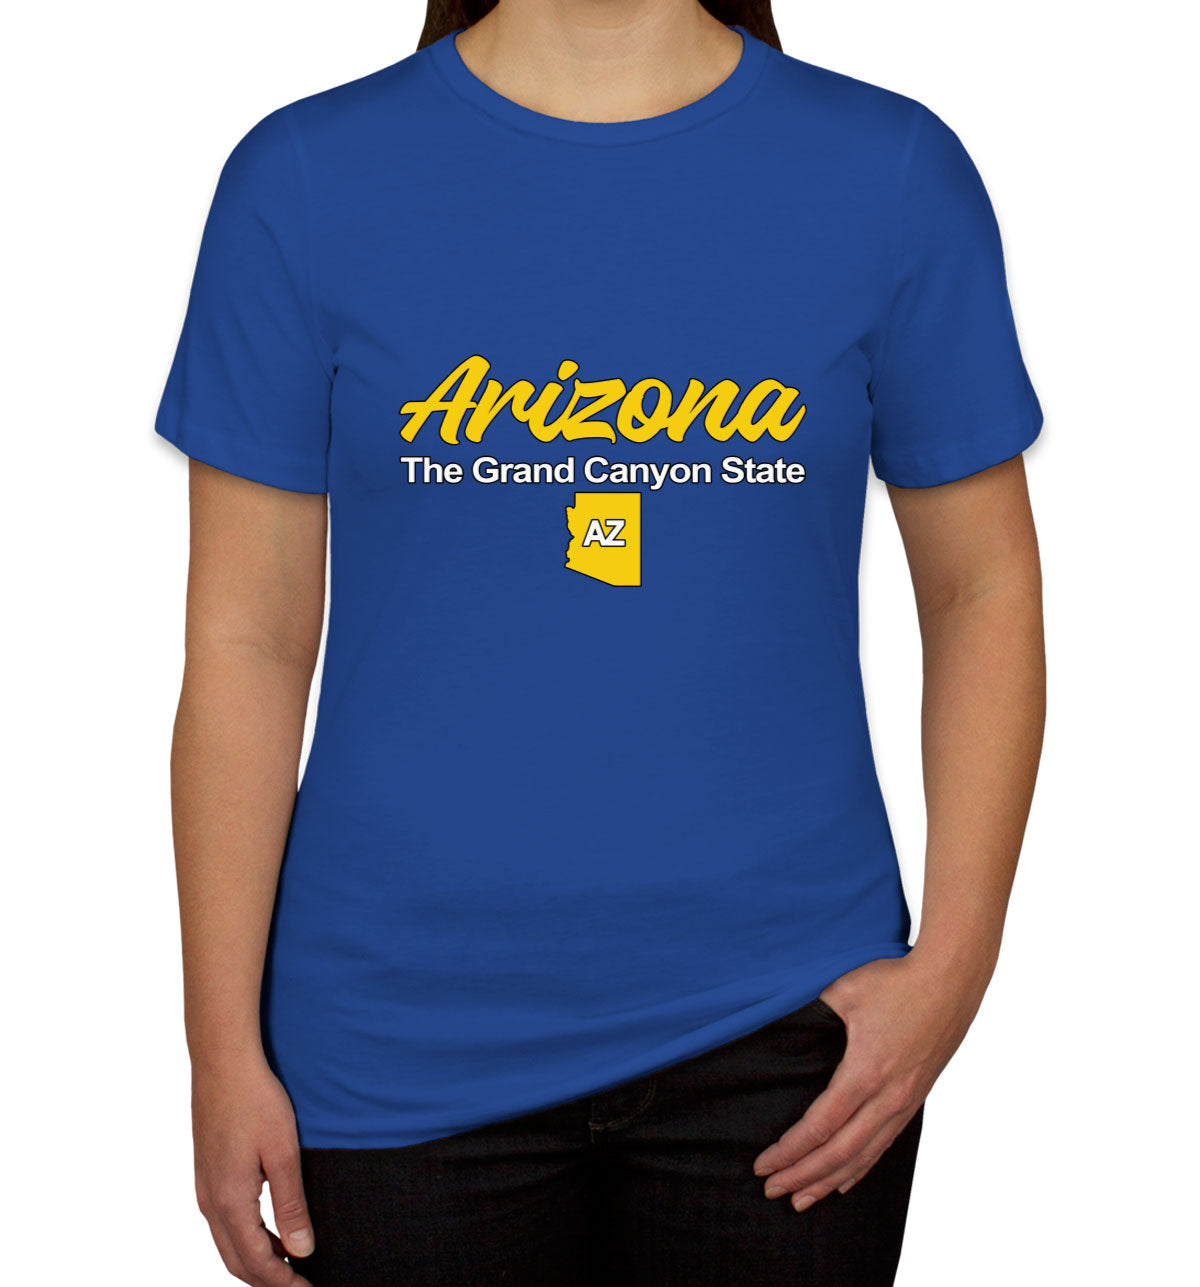 Arizona The Grand Canyon State Women's T-shirt